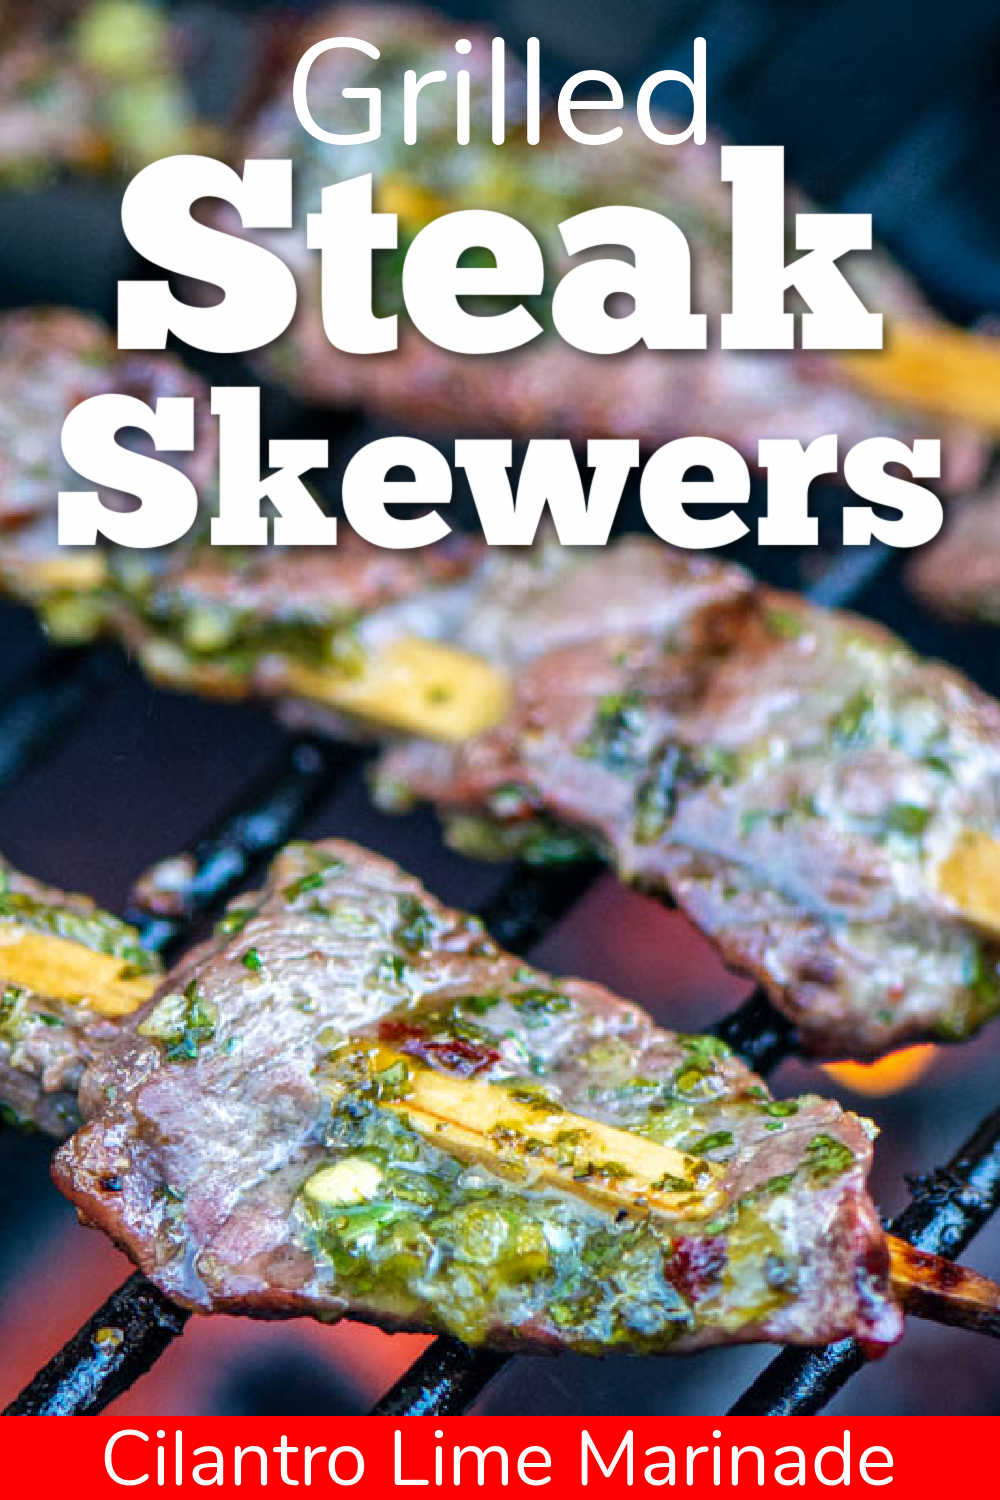 Grilled Cilantro Lime Steak Skewers {6 Minutes}